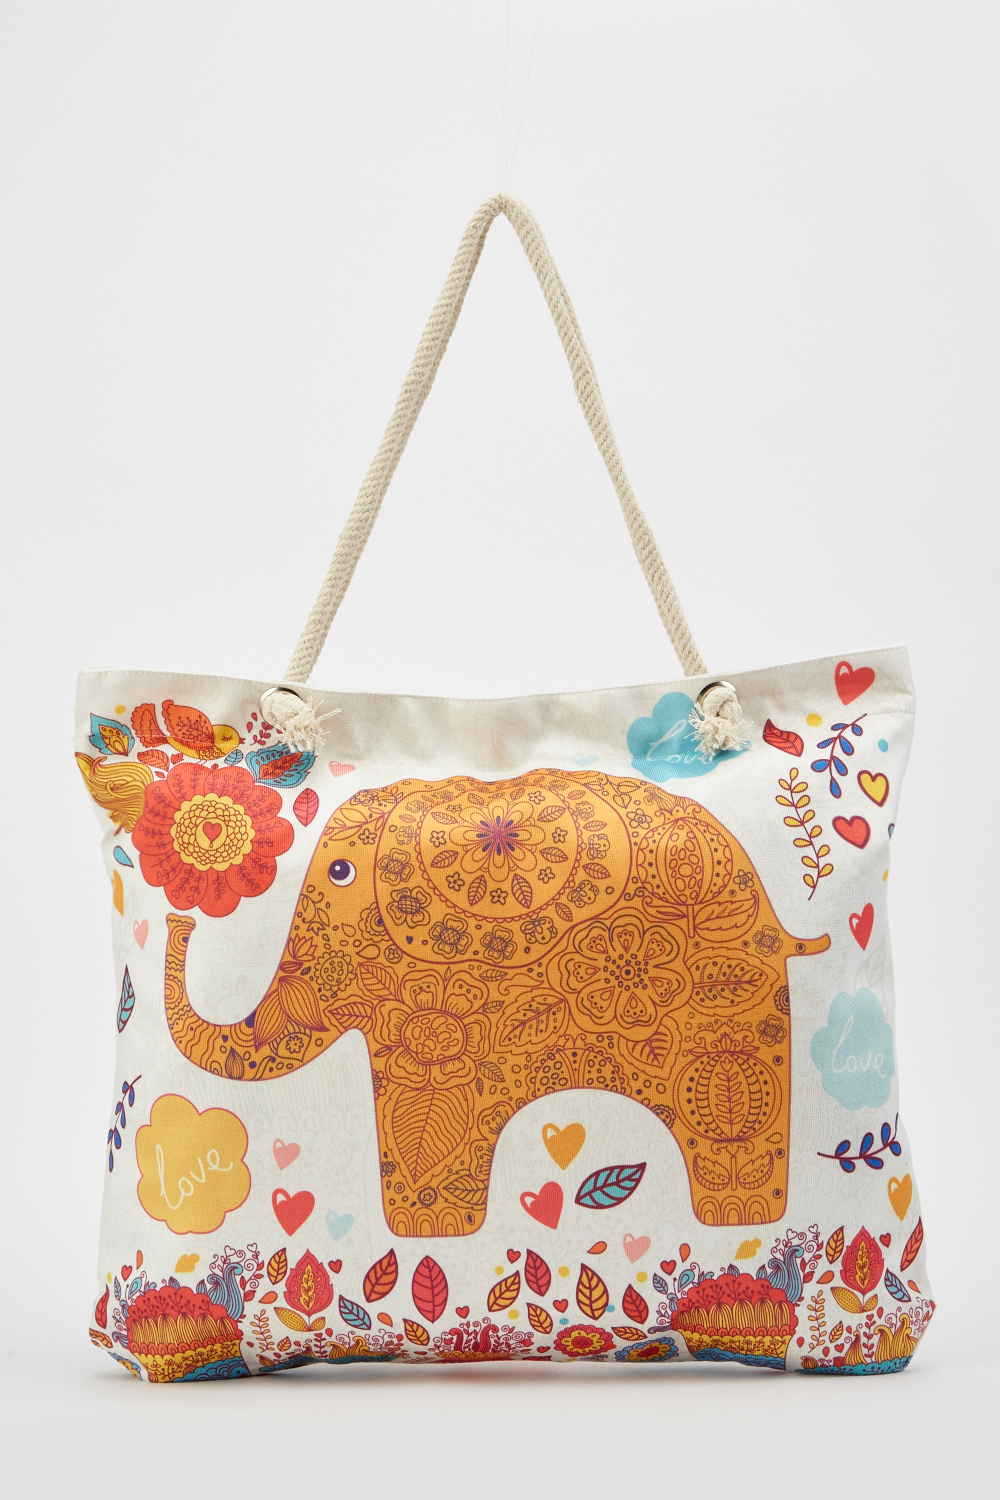 Elephant Printed Tote Bag - Just $7